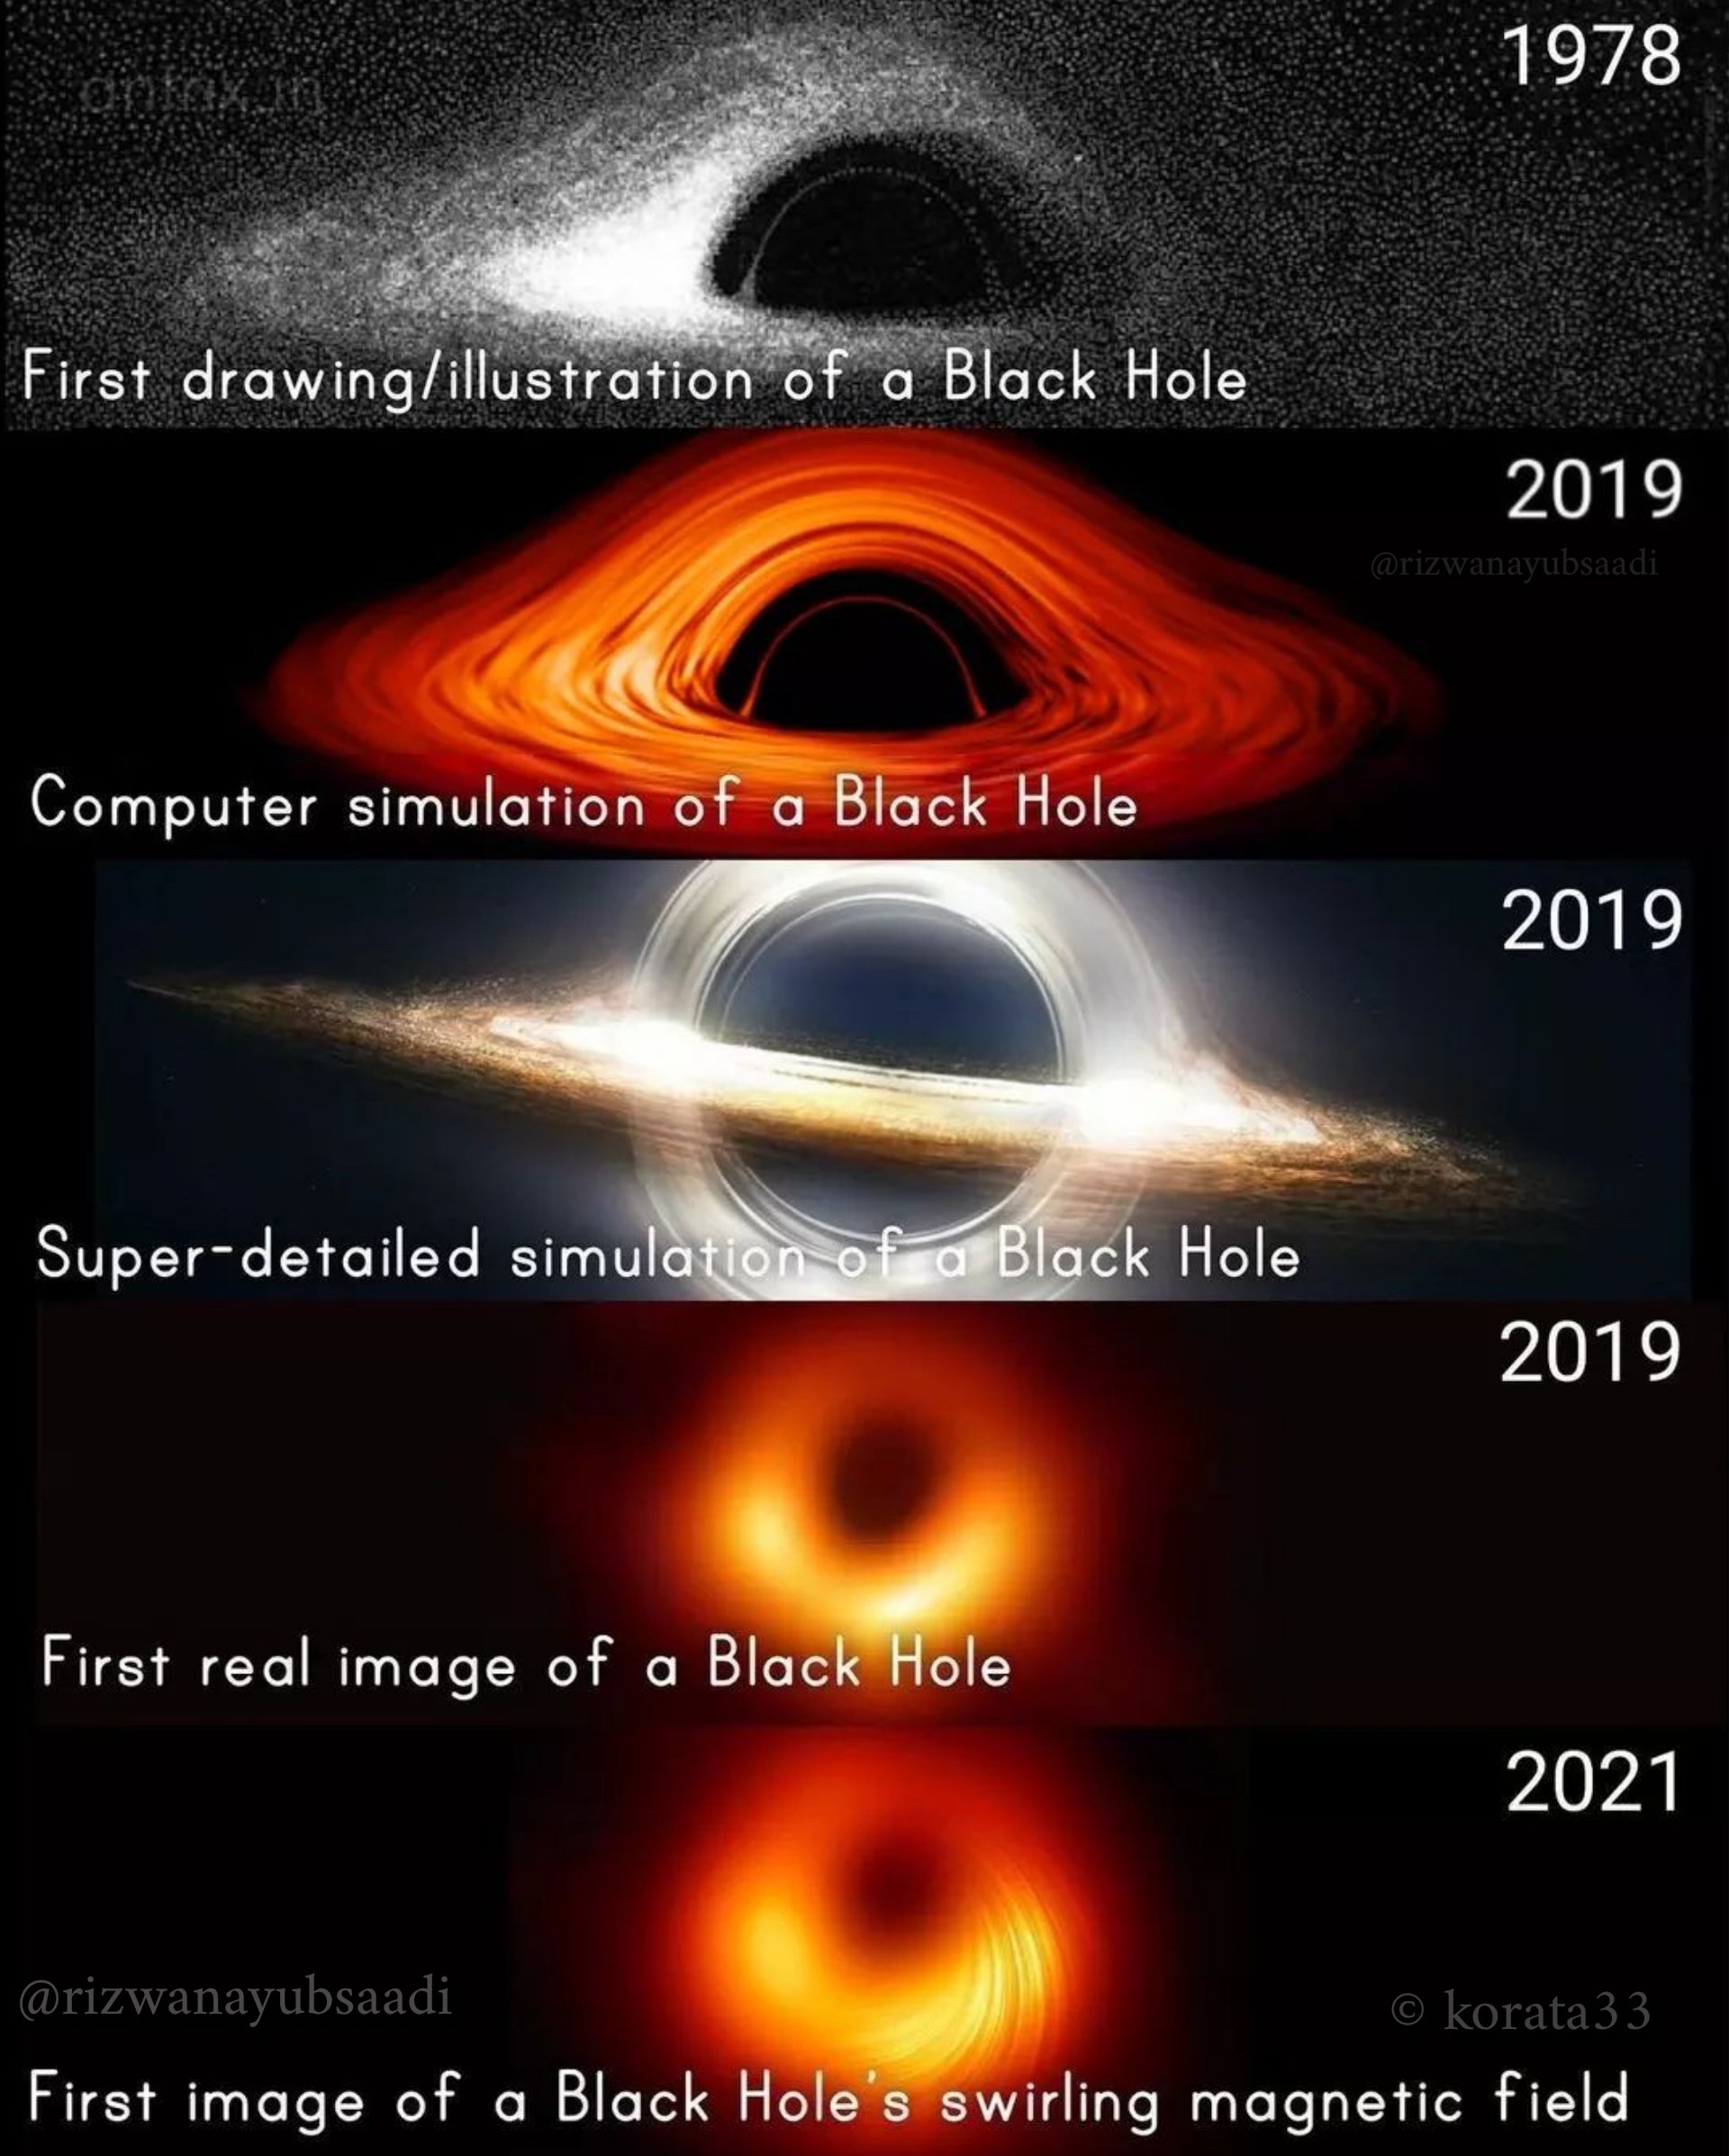 Do black holes have bottoms?